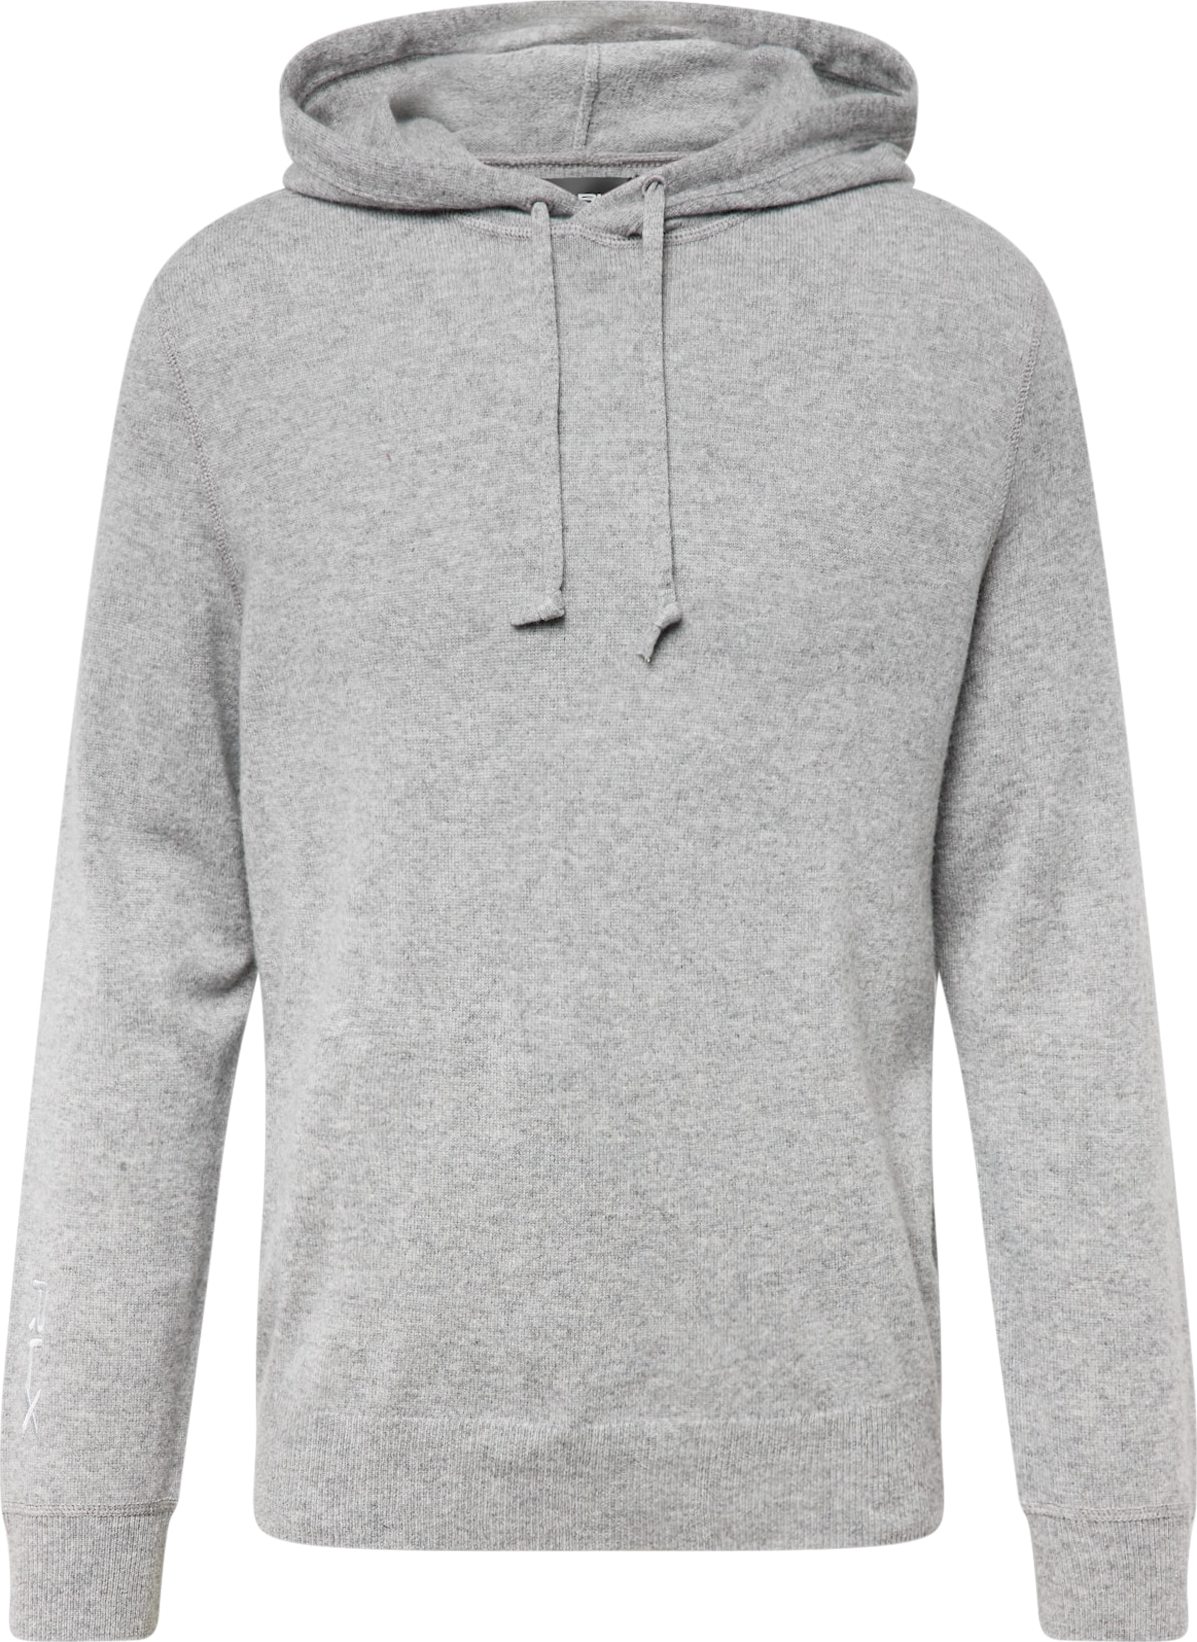 Sportovní svetr Polo Ralph Lauren šedý melír / bílá